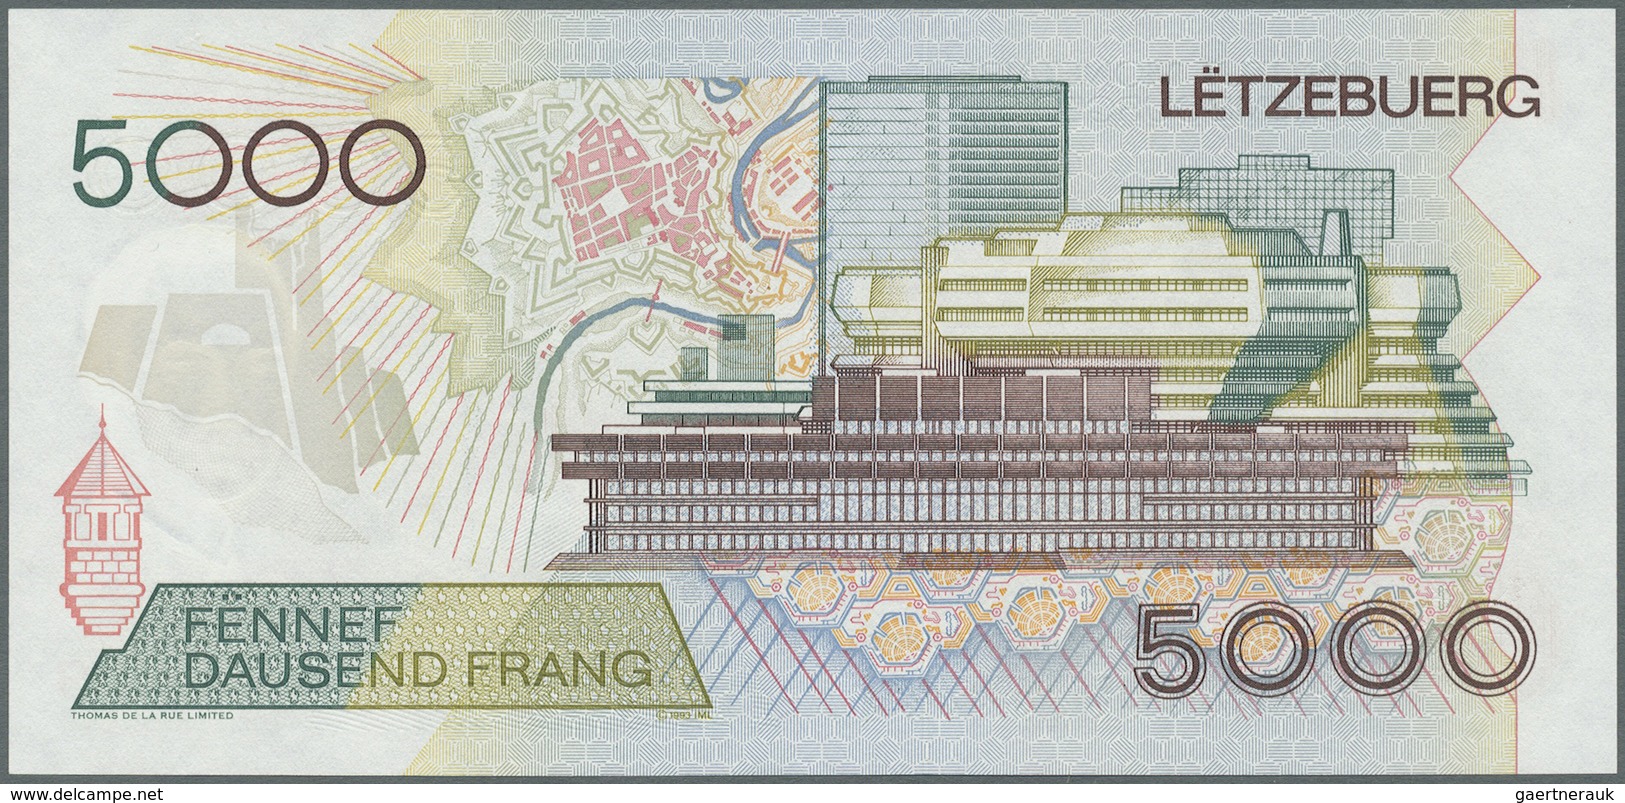 Luxembourg: 5000 Francs 1996 P. 60b In Great Original Condition: UNC. - Lussemburgo